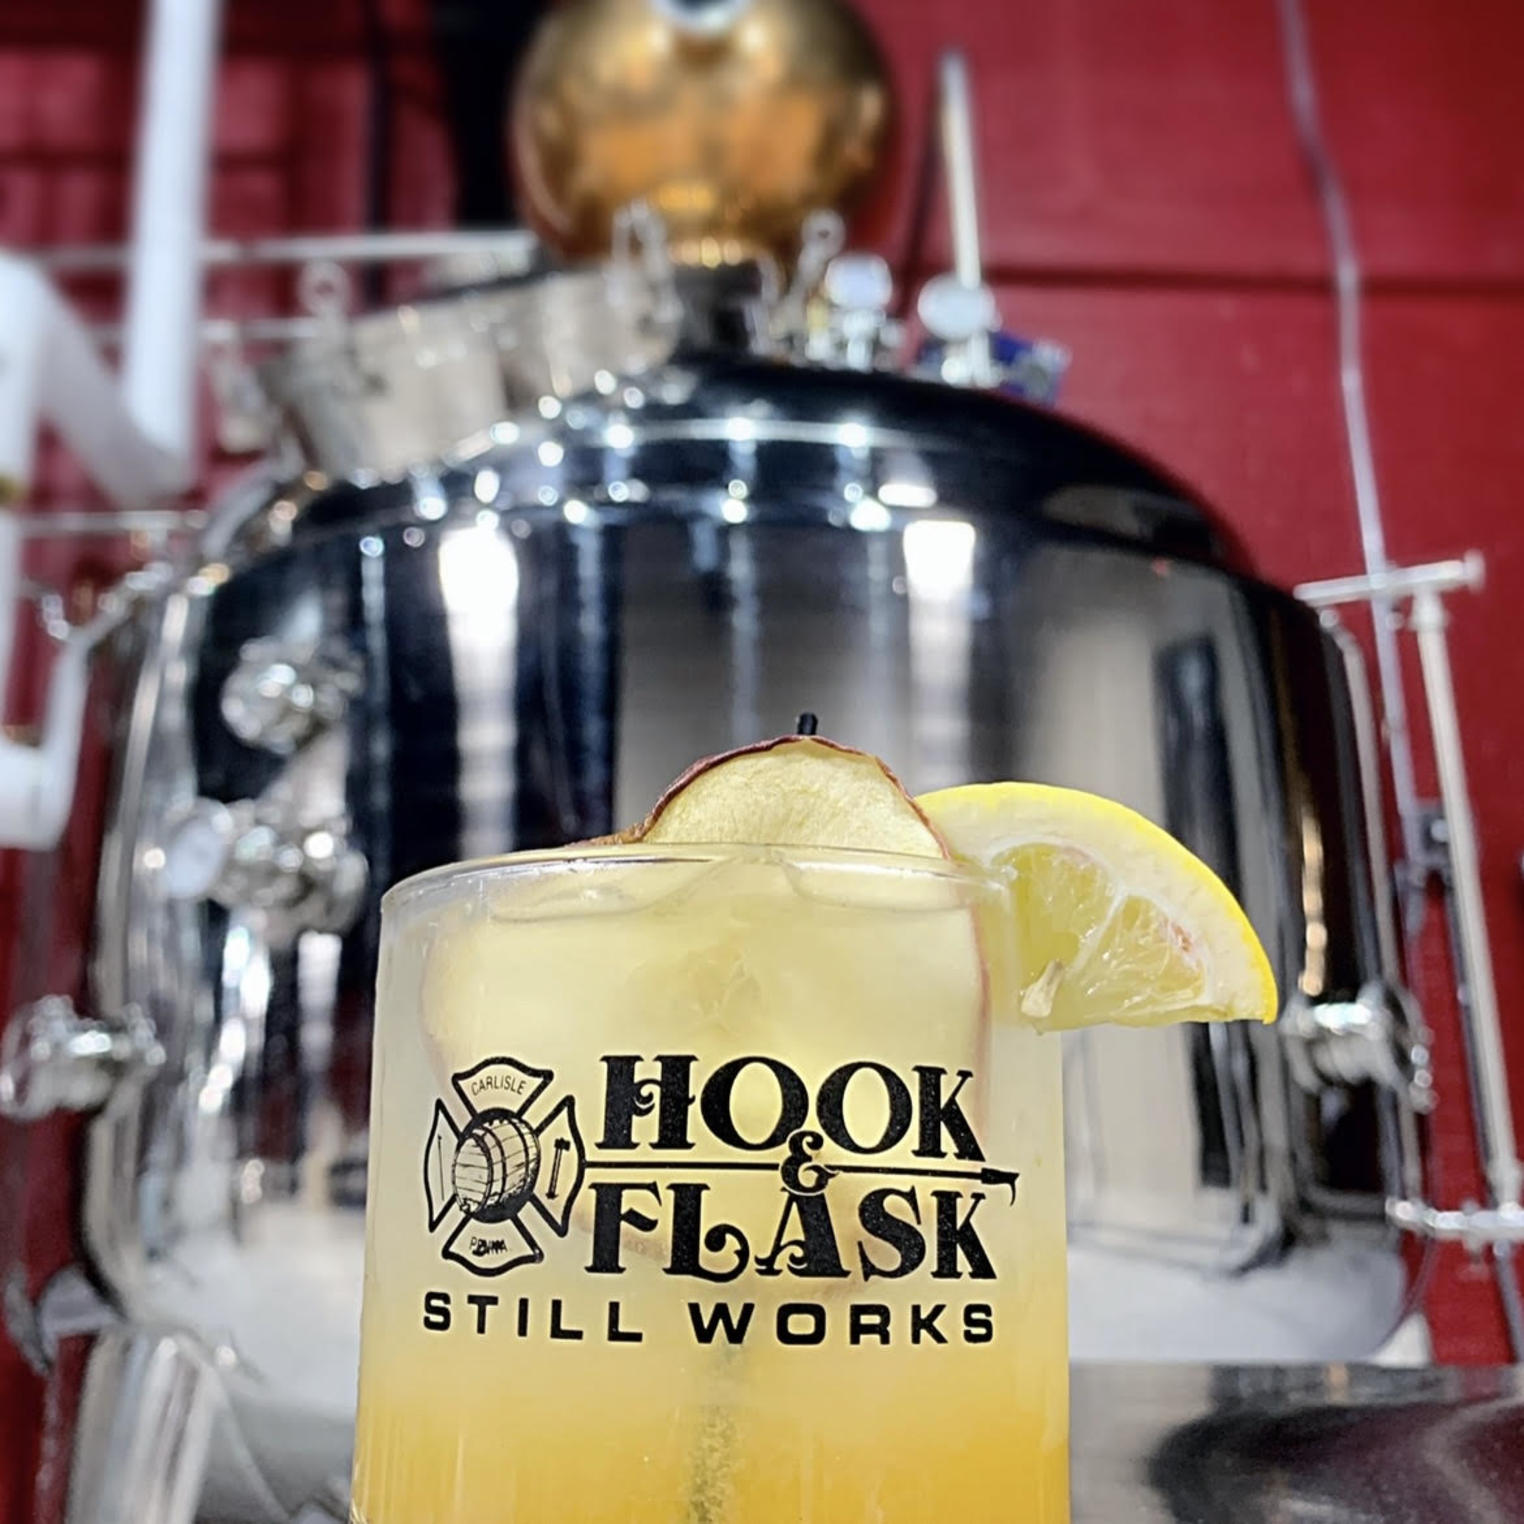 Hook & Flask Still Works